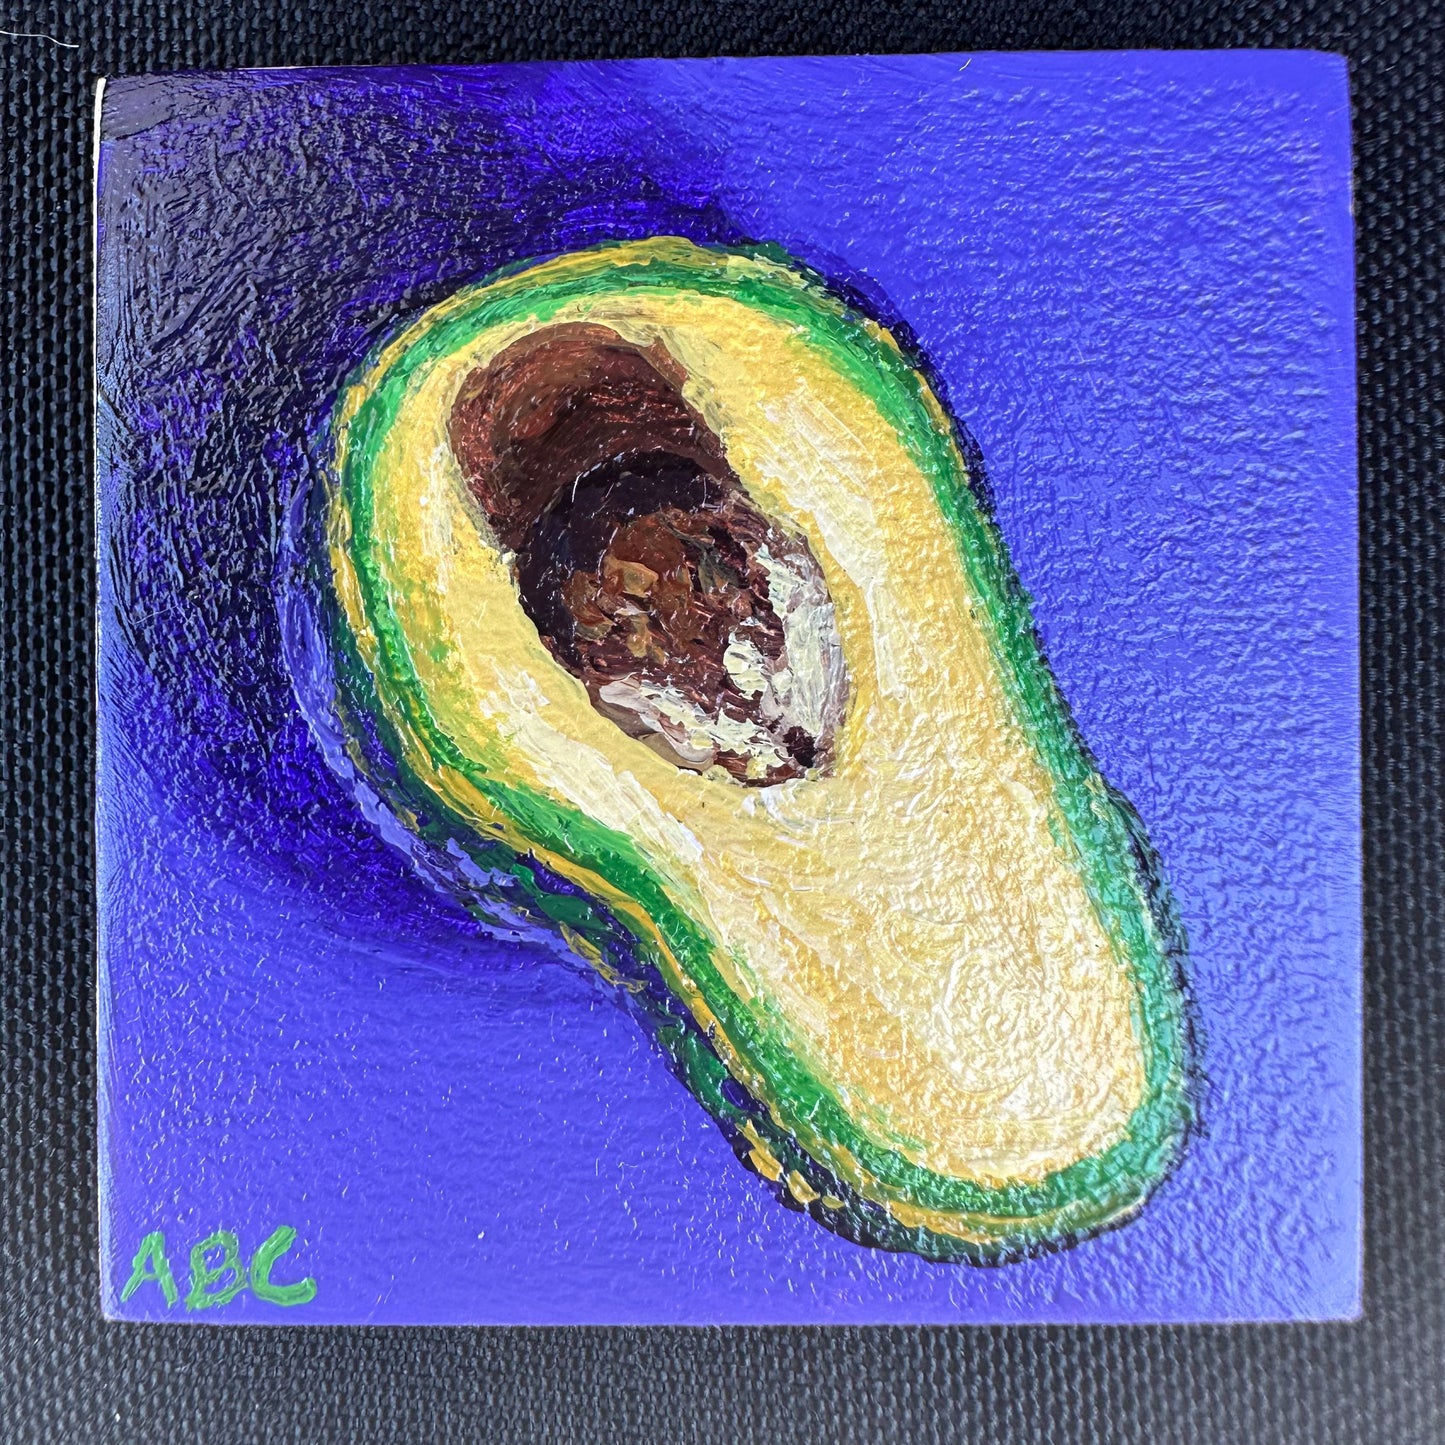 Teeny purple avocado - 2x2 - oil on panel - magnet oil painting